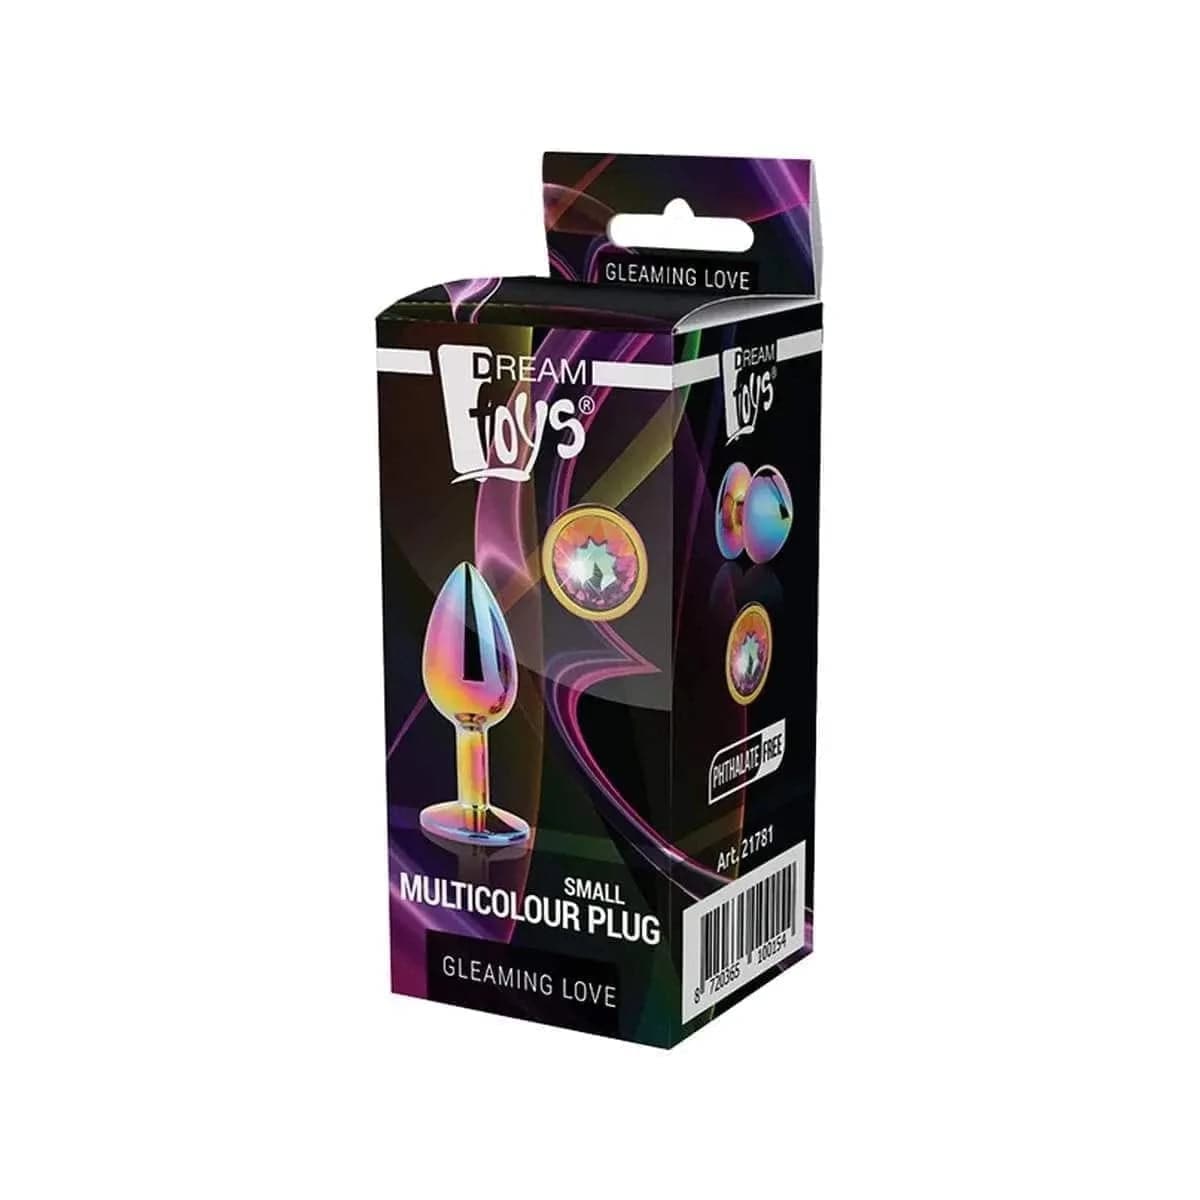 Plug de Metal GLEAMING LOVE Multicolour Pequeno, Brilhante Multicolour, 7.1cm Ø2.7cm  Dream Toys   